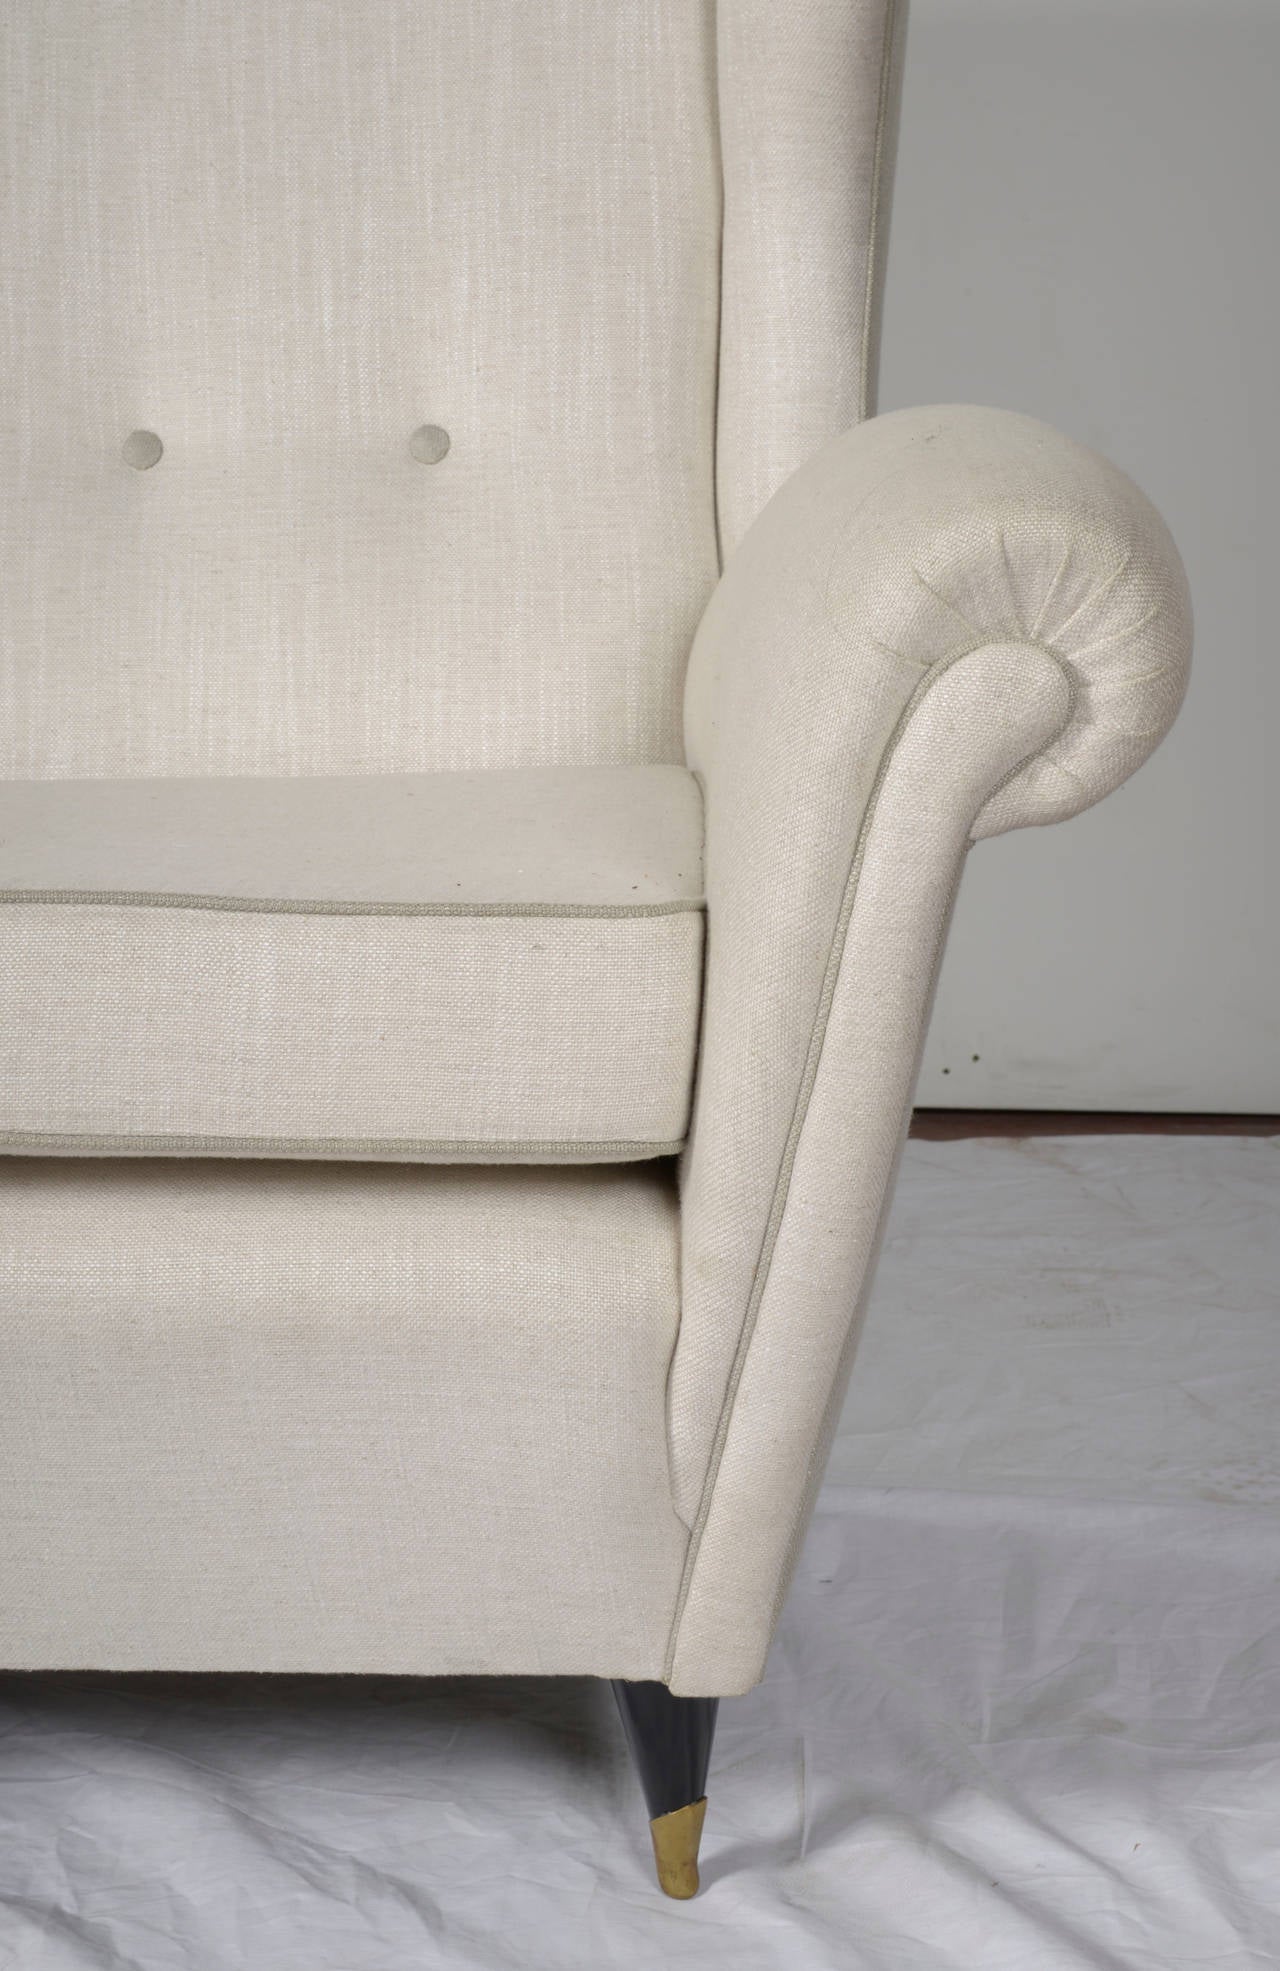 1960s Italian sofa.
Ivory and pale grey silk velvet fabric.
Wood, brass.